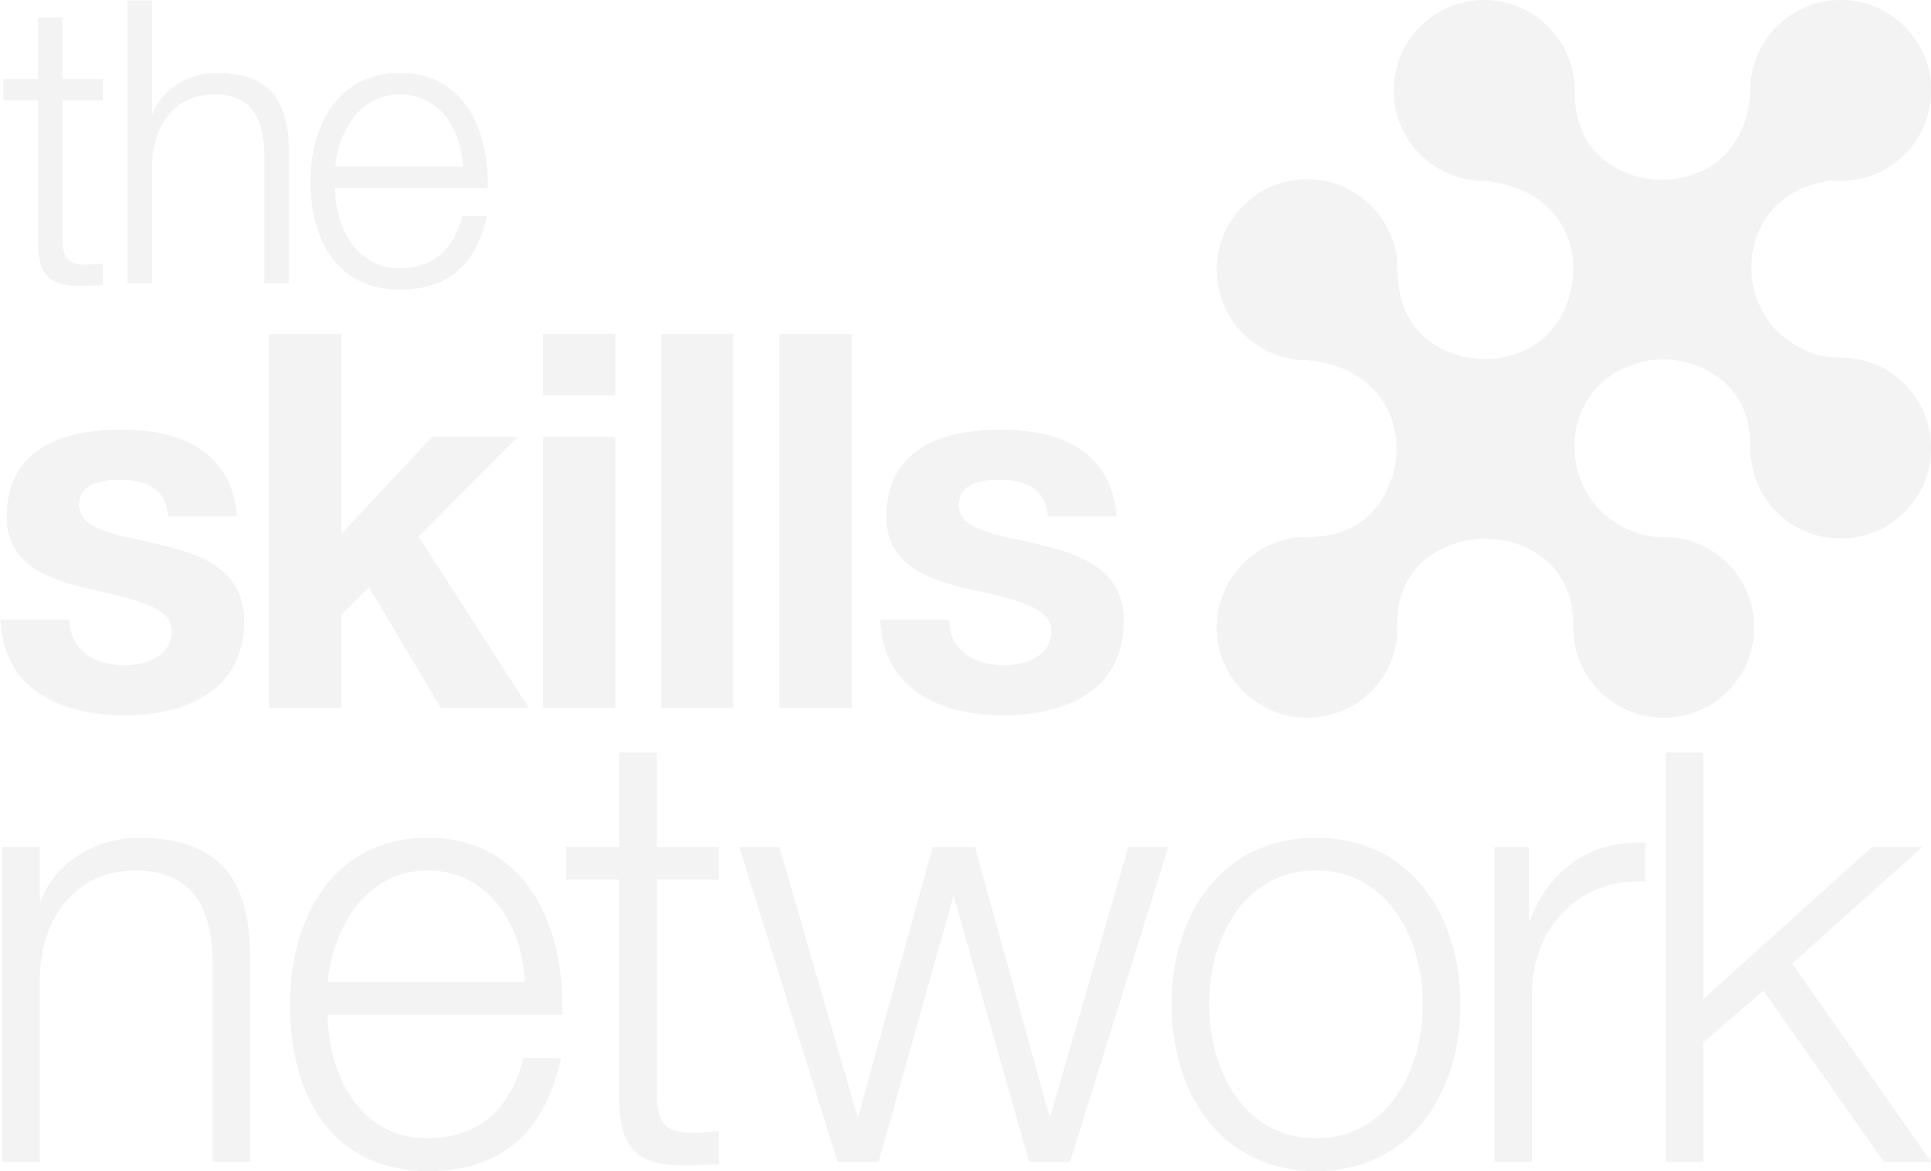 Individuals - Skills Network